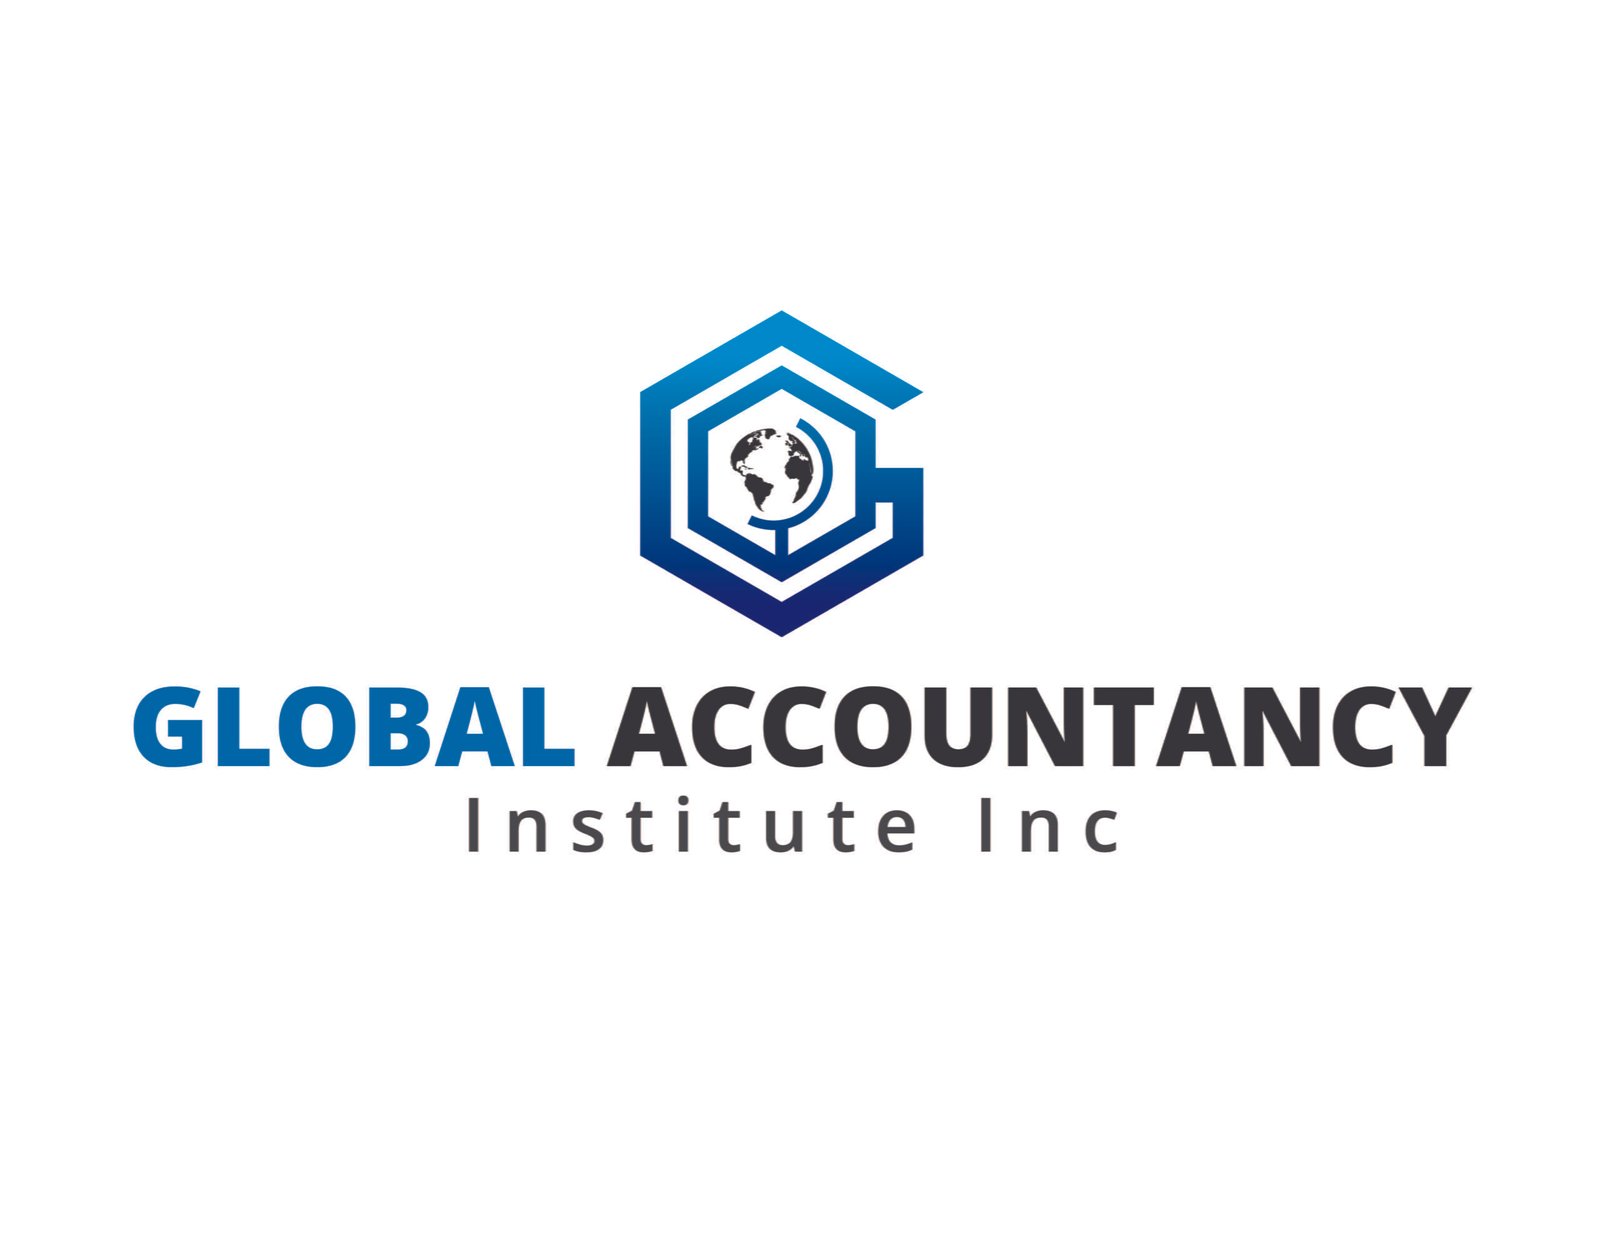 Global Accountancy Institute,Inc.